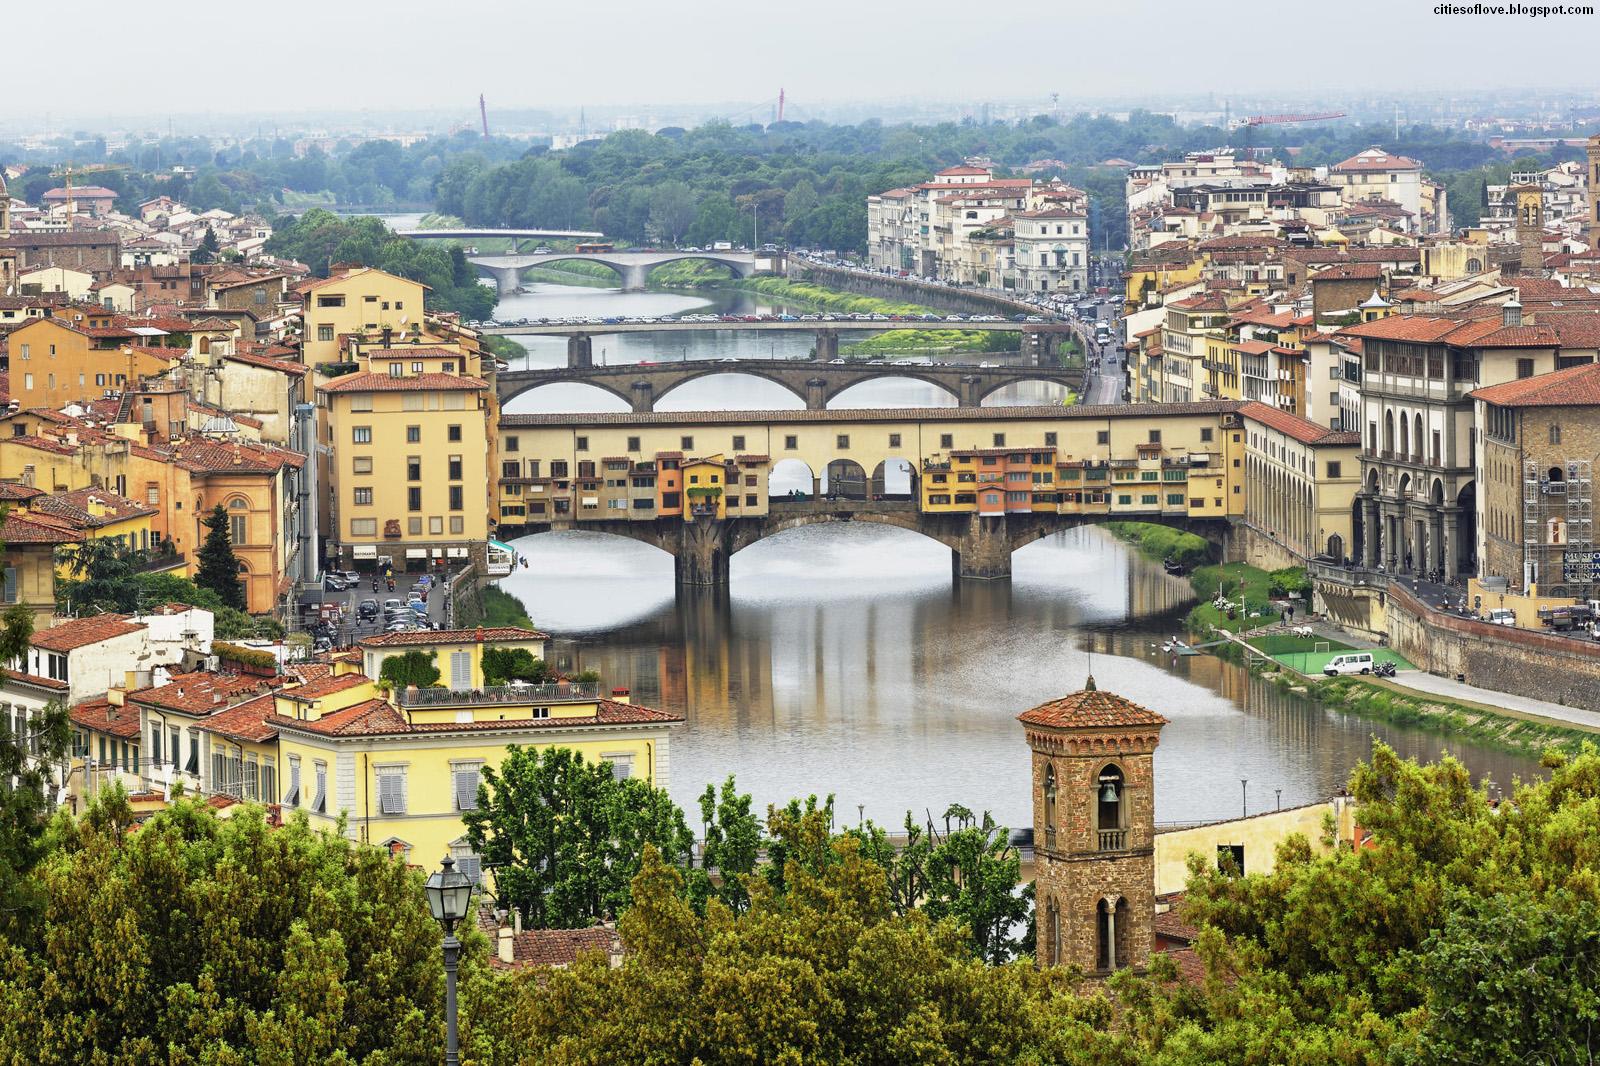  Old Bridge Arno River Italy Hd Desktop Wallpaper Image Gallery and HD 1600x1066